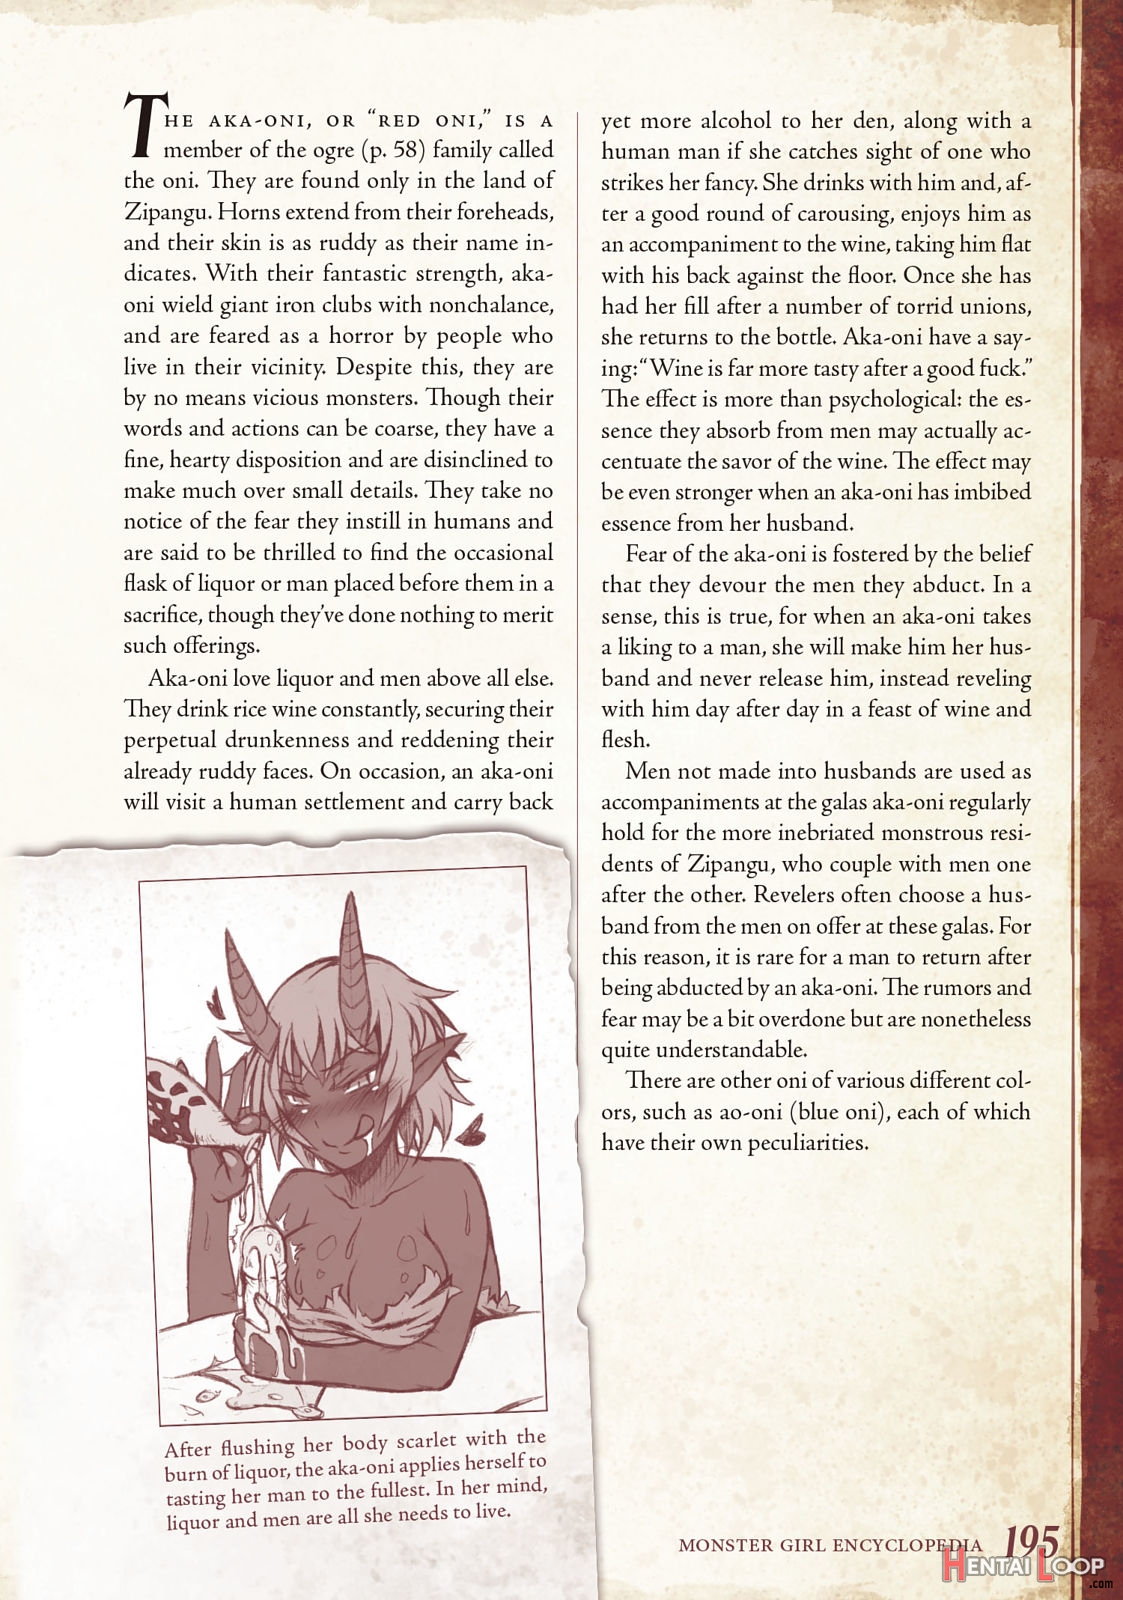 Monster Girl Encyclopedia Vol. 1 page 196